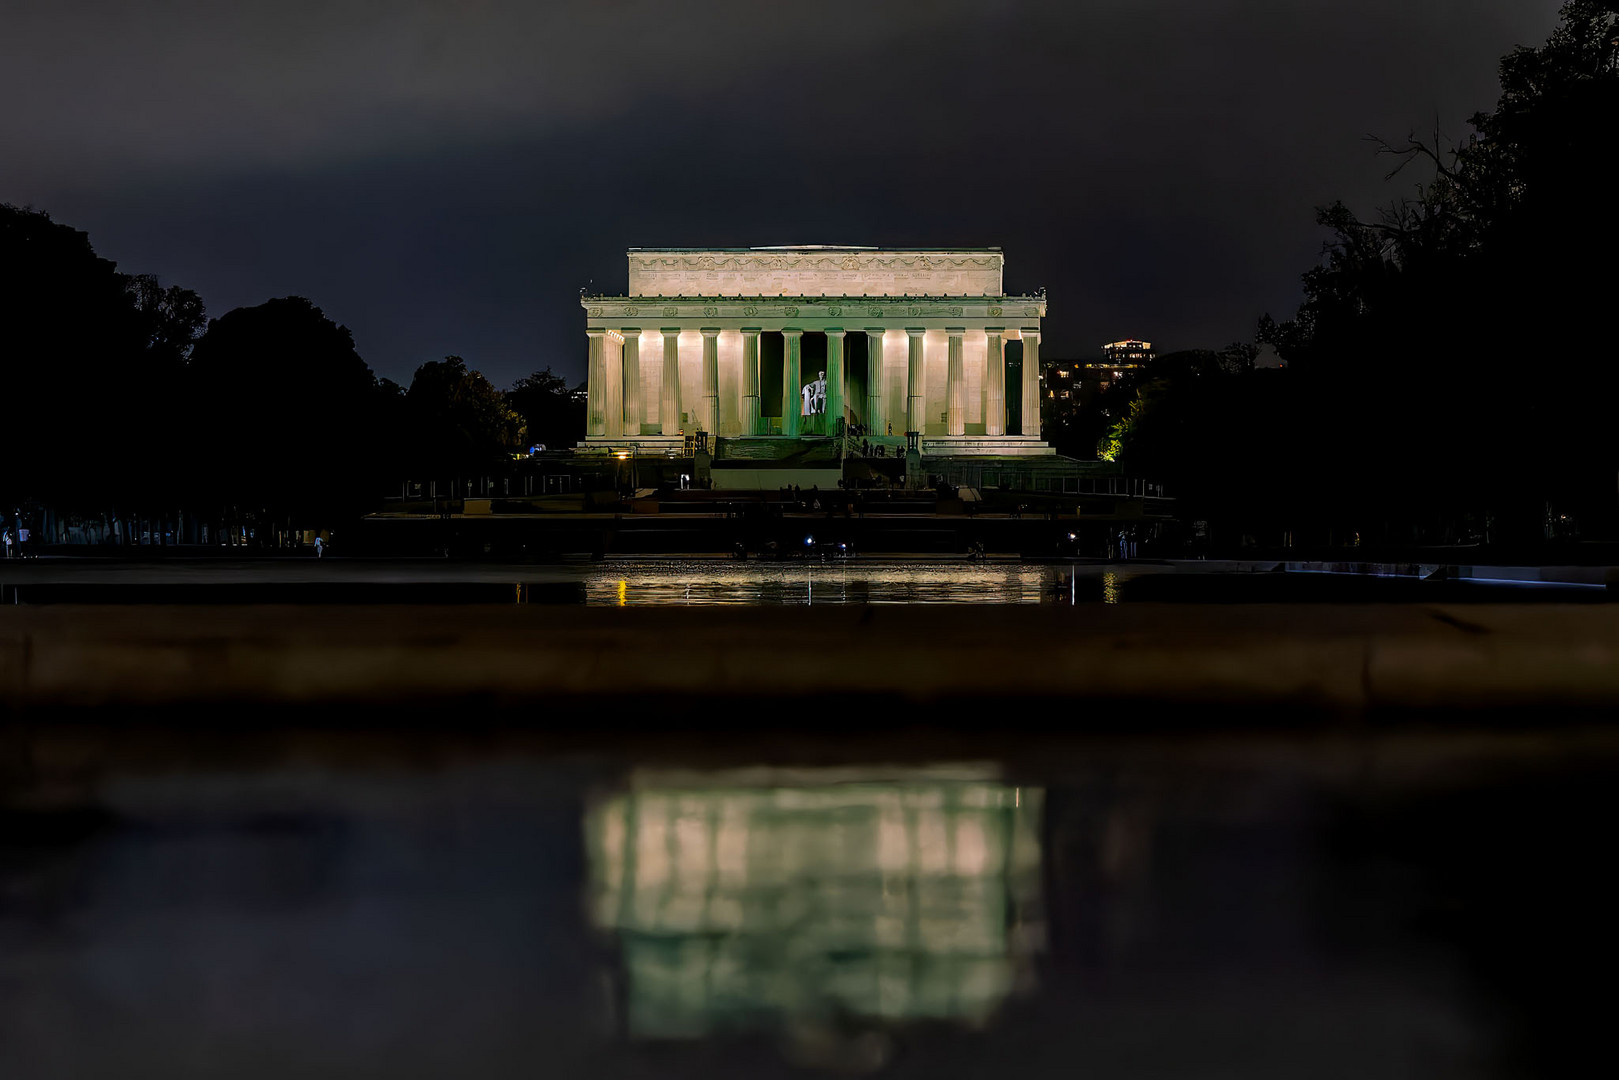 "Lincoln Memorial" in Washington D.C. ...